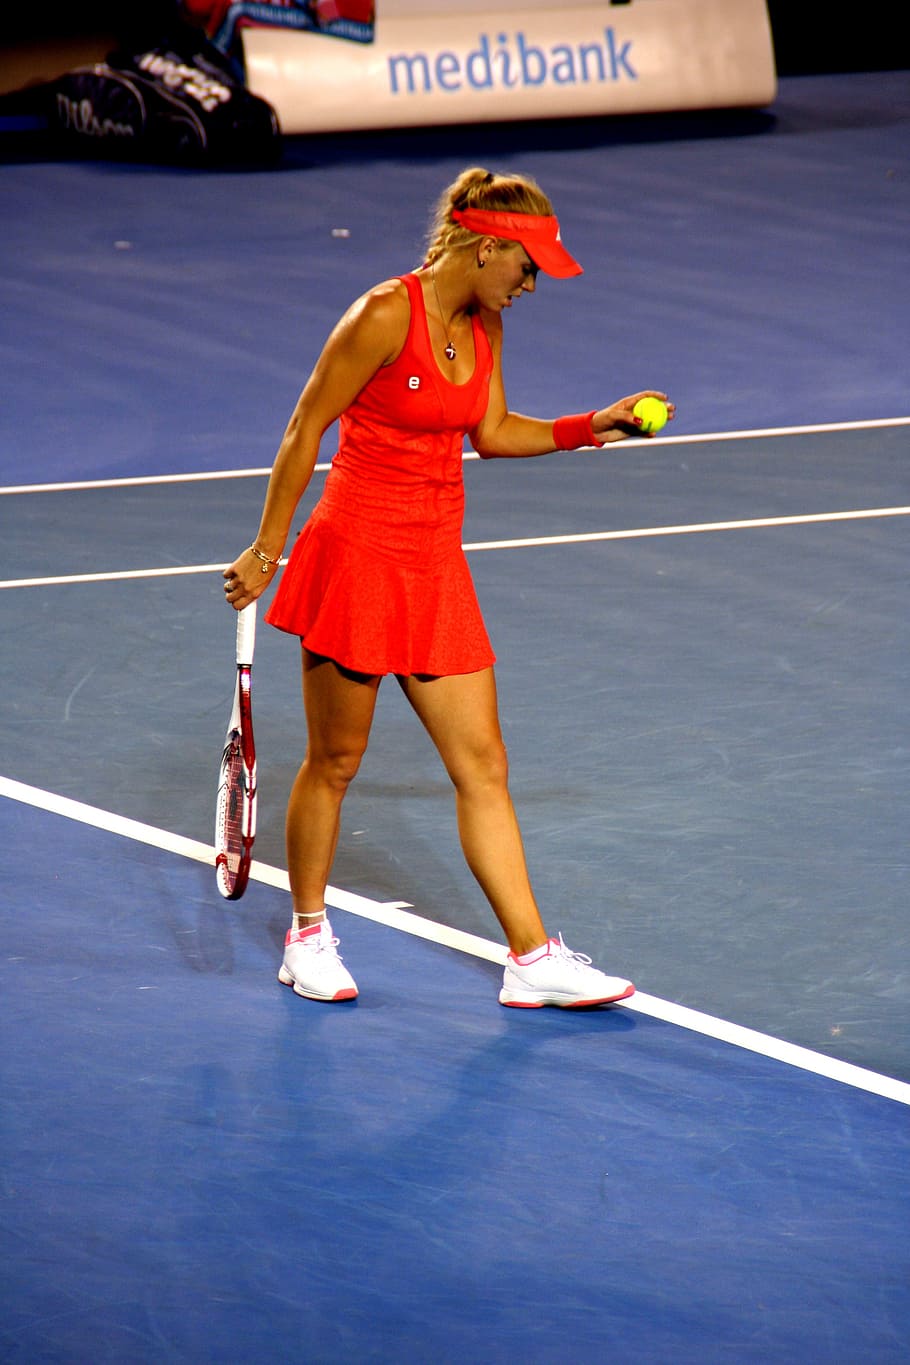 female, tennis player, performing, serve, caroline wozniacki, tennis, player, woman, sport, female athlete